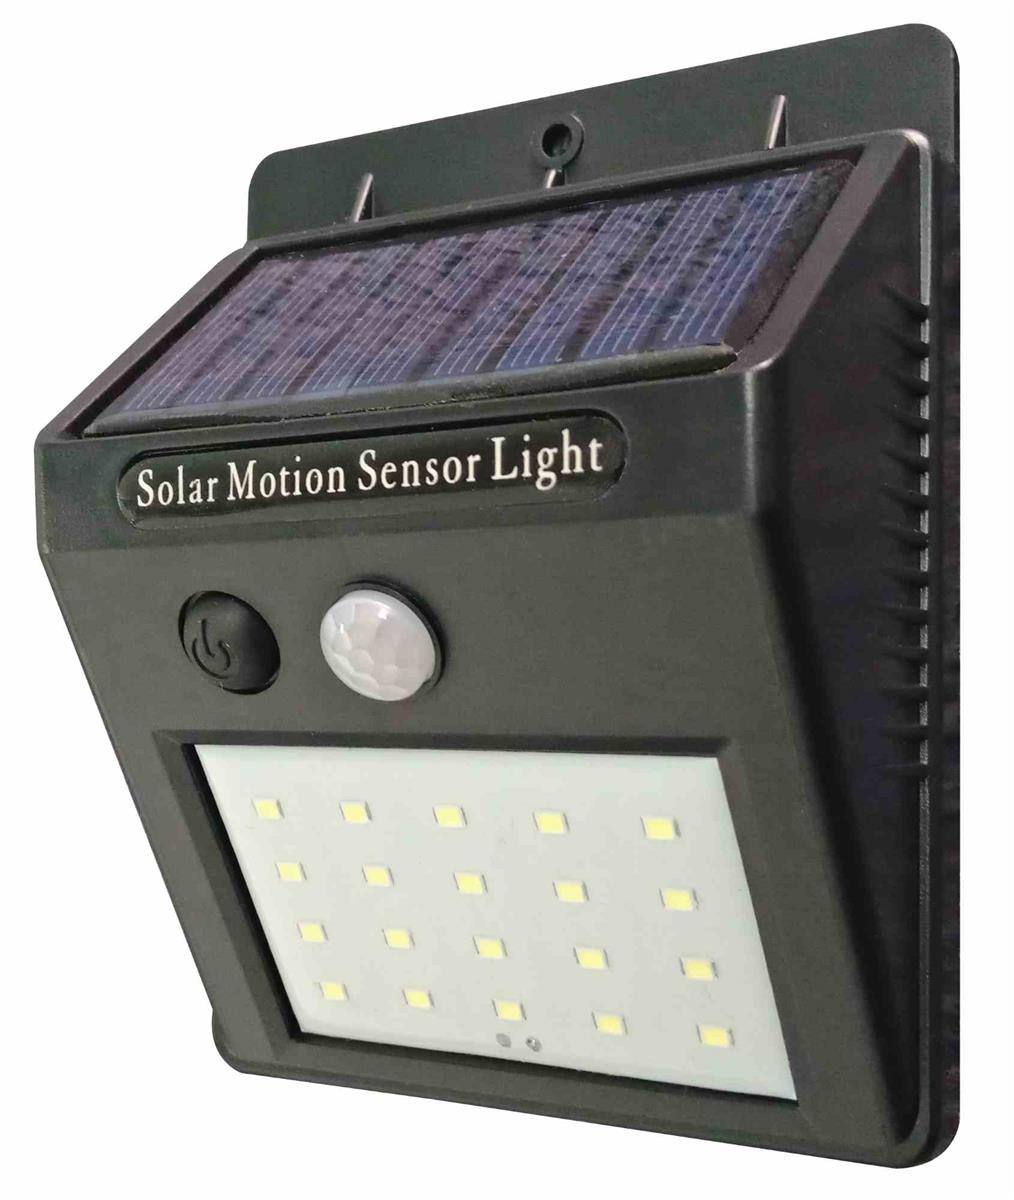 Jy6009 Solar Motion sensor Light. Фонарь Solar Motion sensor Light. Прожектор светодиодный Solar Motion sensor Light. Светодиодный светильник Solar Motion sensor Light. Прожектор светодиодный уличный на солнечных батареях